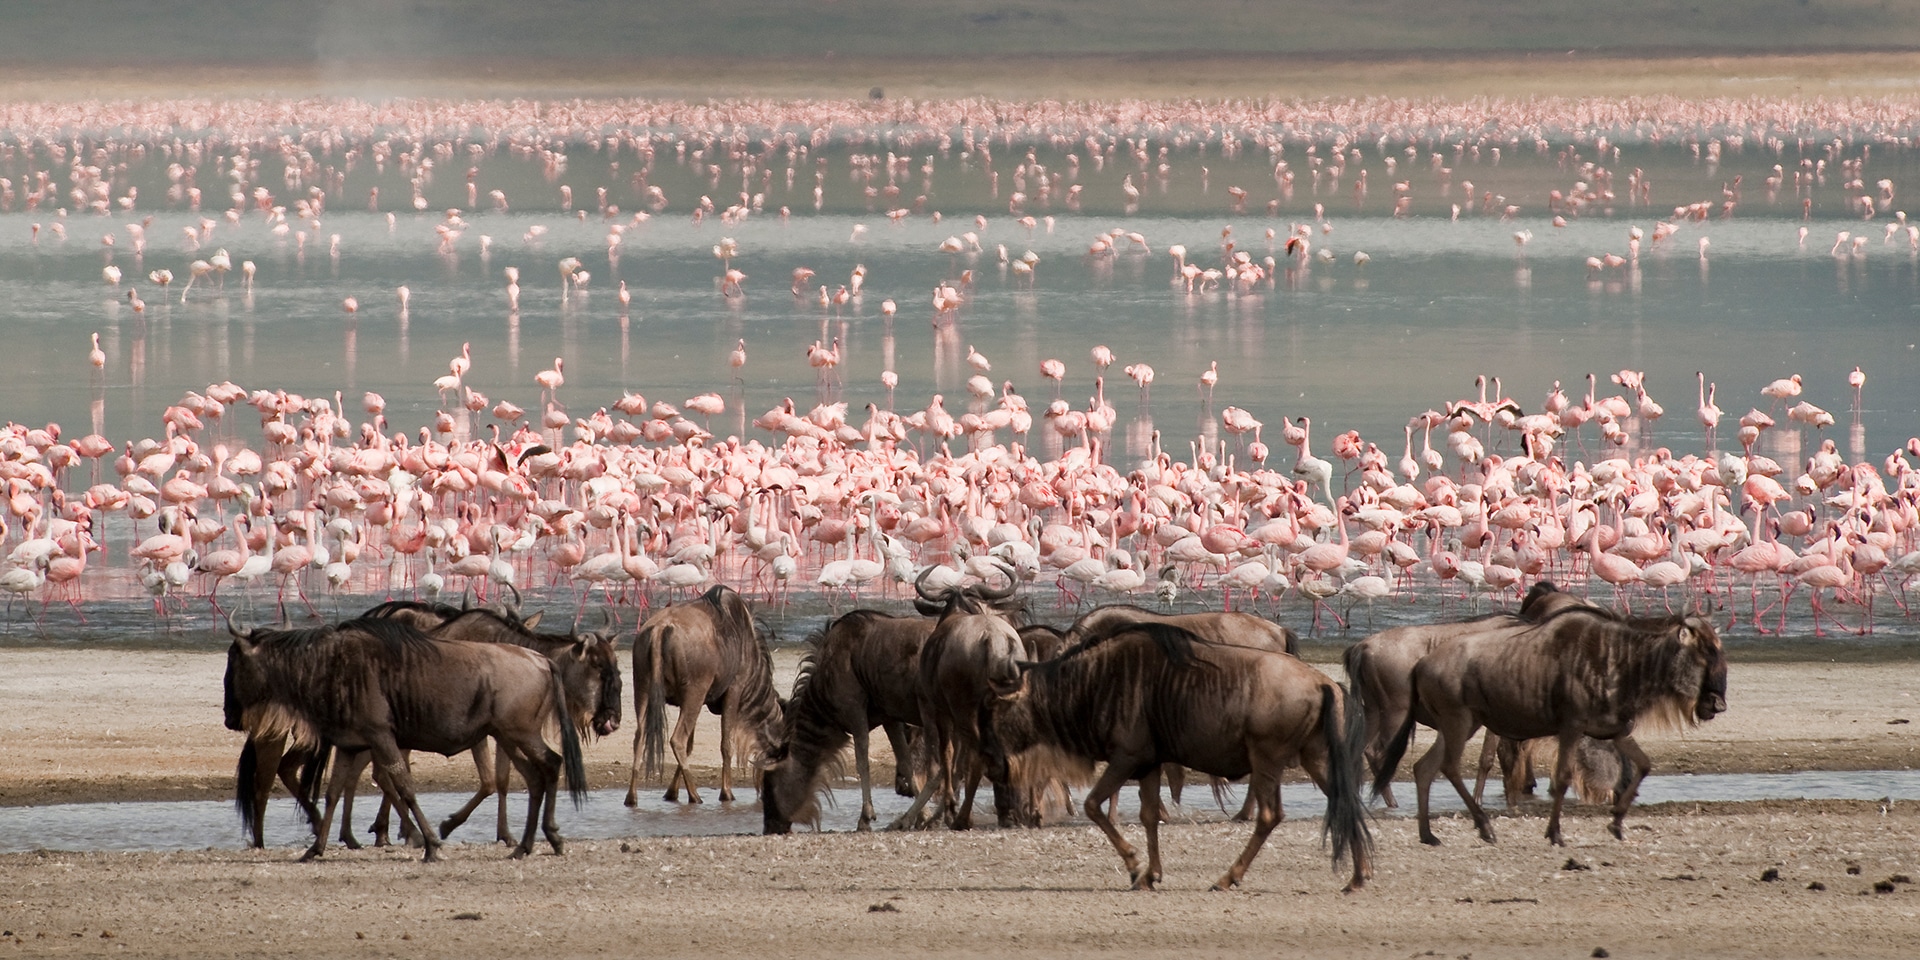 Plan a Tanzania Safari | Marriott Bonvoy Traveler